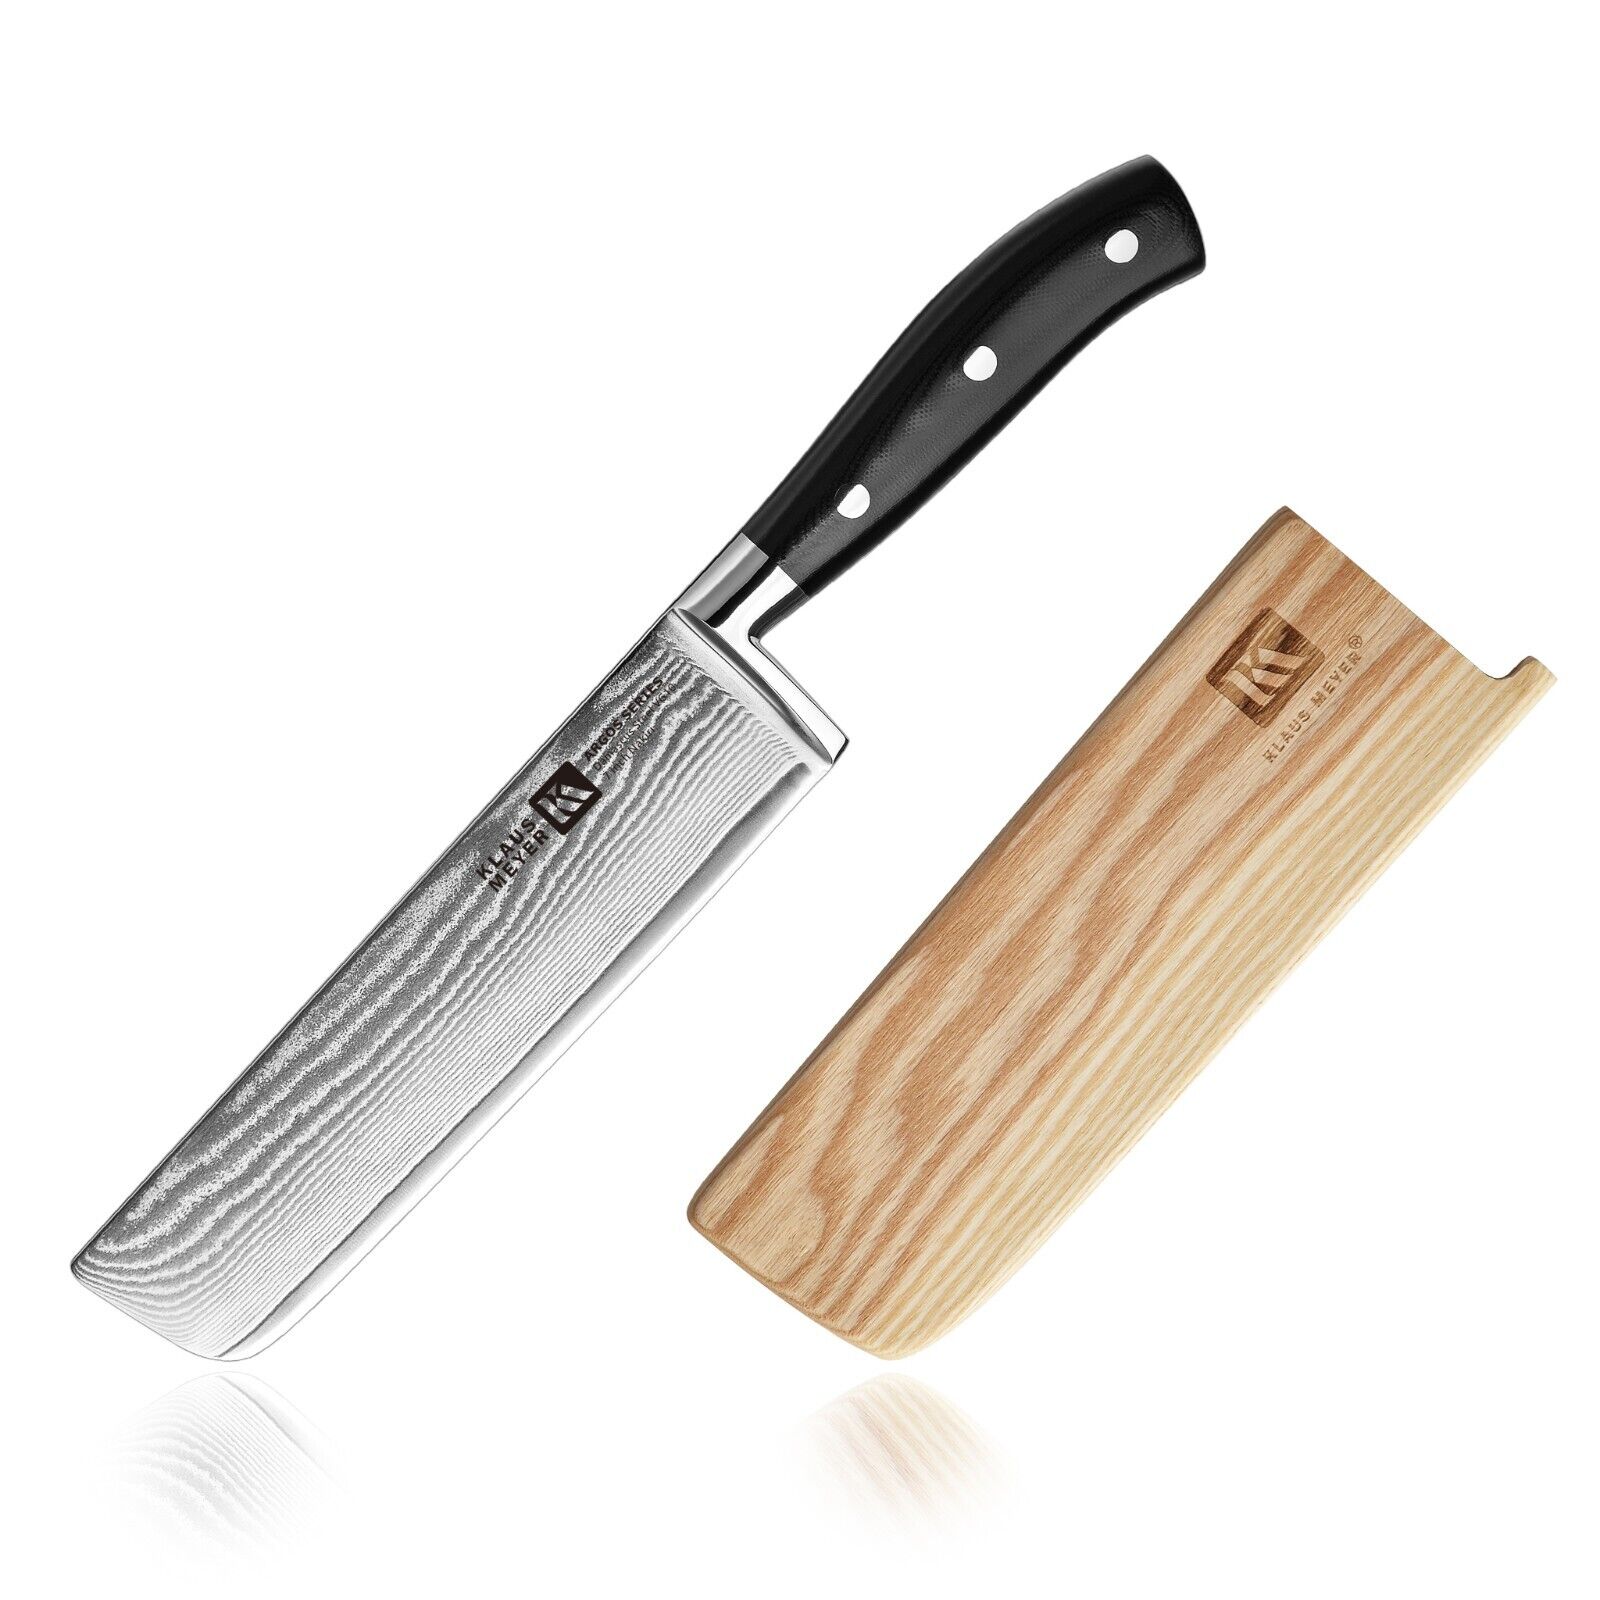 Klaus Meyer Argos Damascus Steel 7 inch Nakiri Knife with Wood Sheath